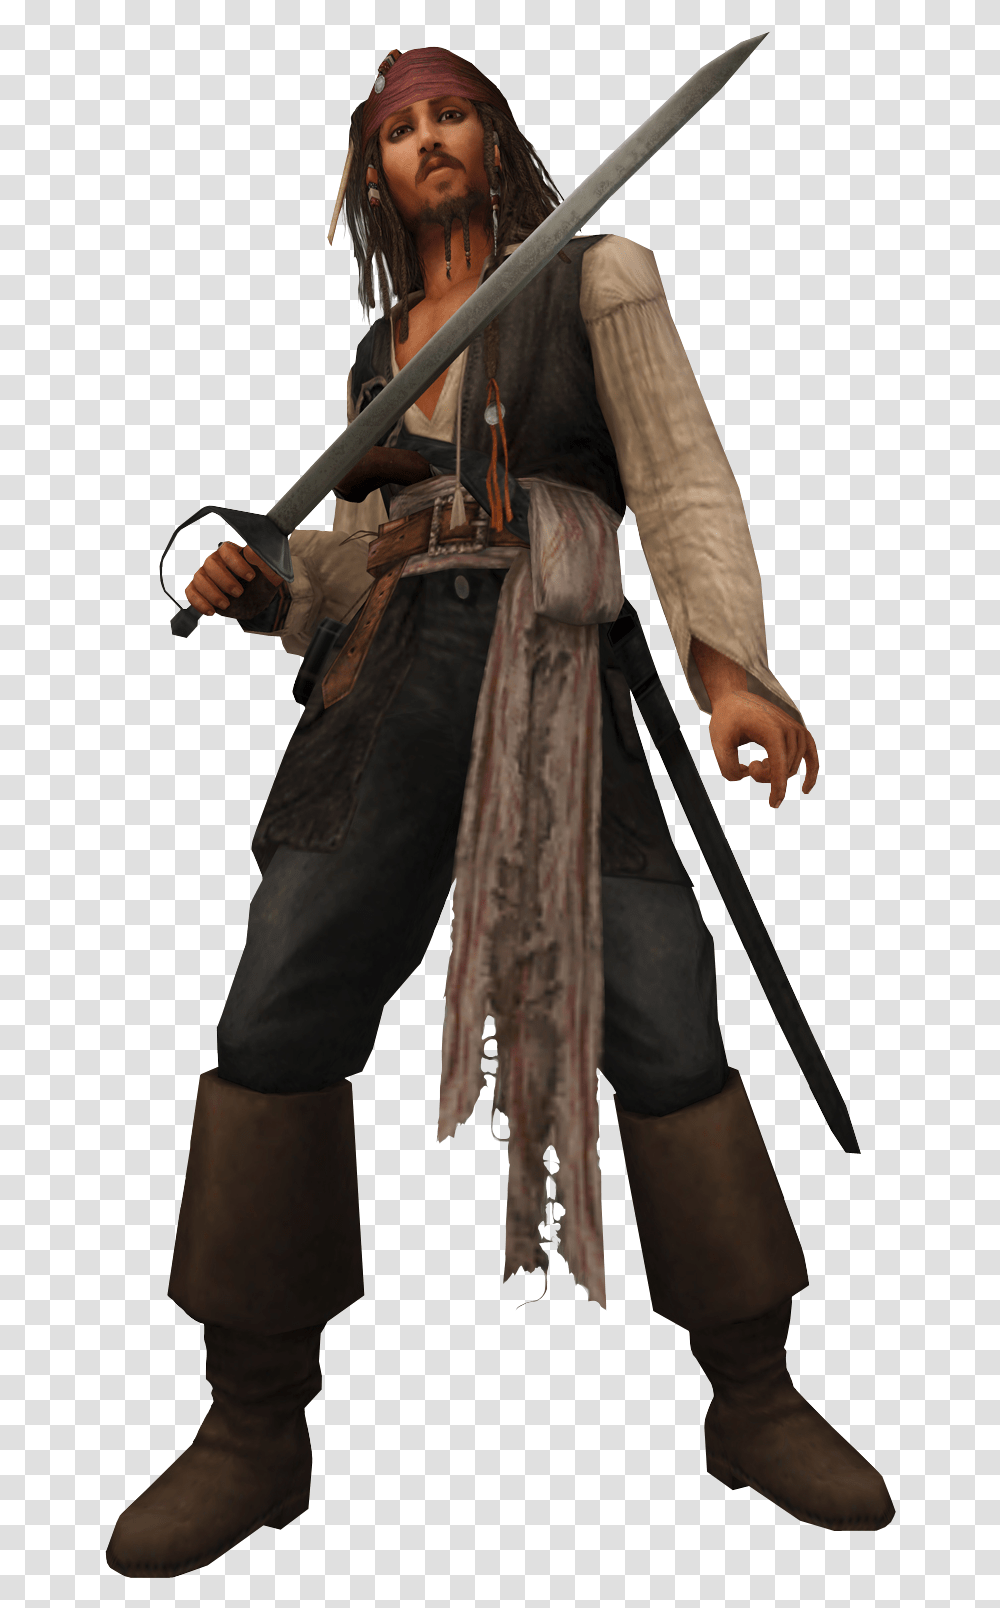 Pirate Image Web Icons Kingdom Hearts Captain Jack Sparrow, Clothing, Person, Samurai, Costume Transparent Png